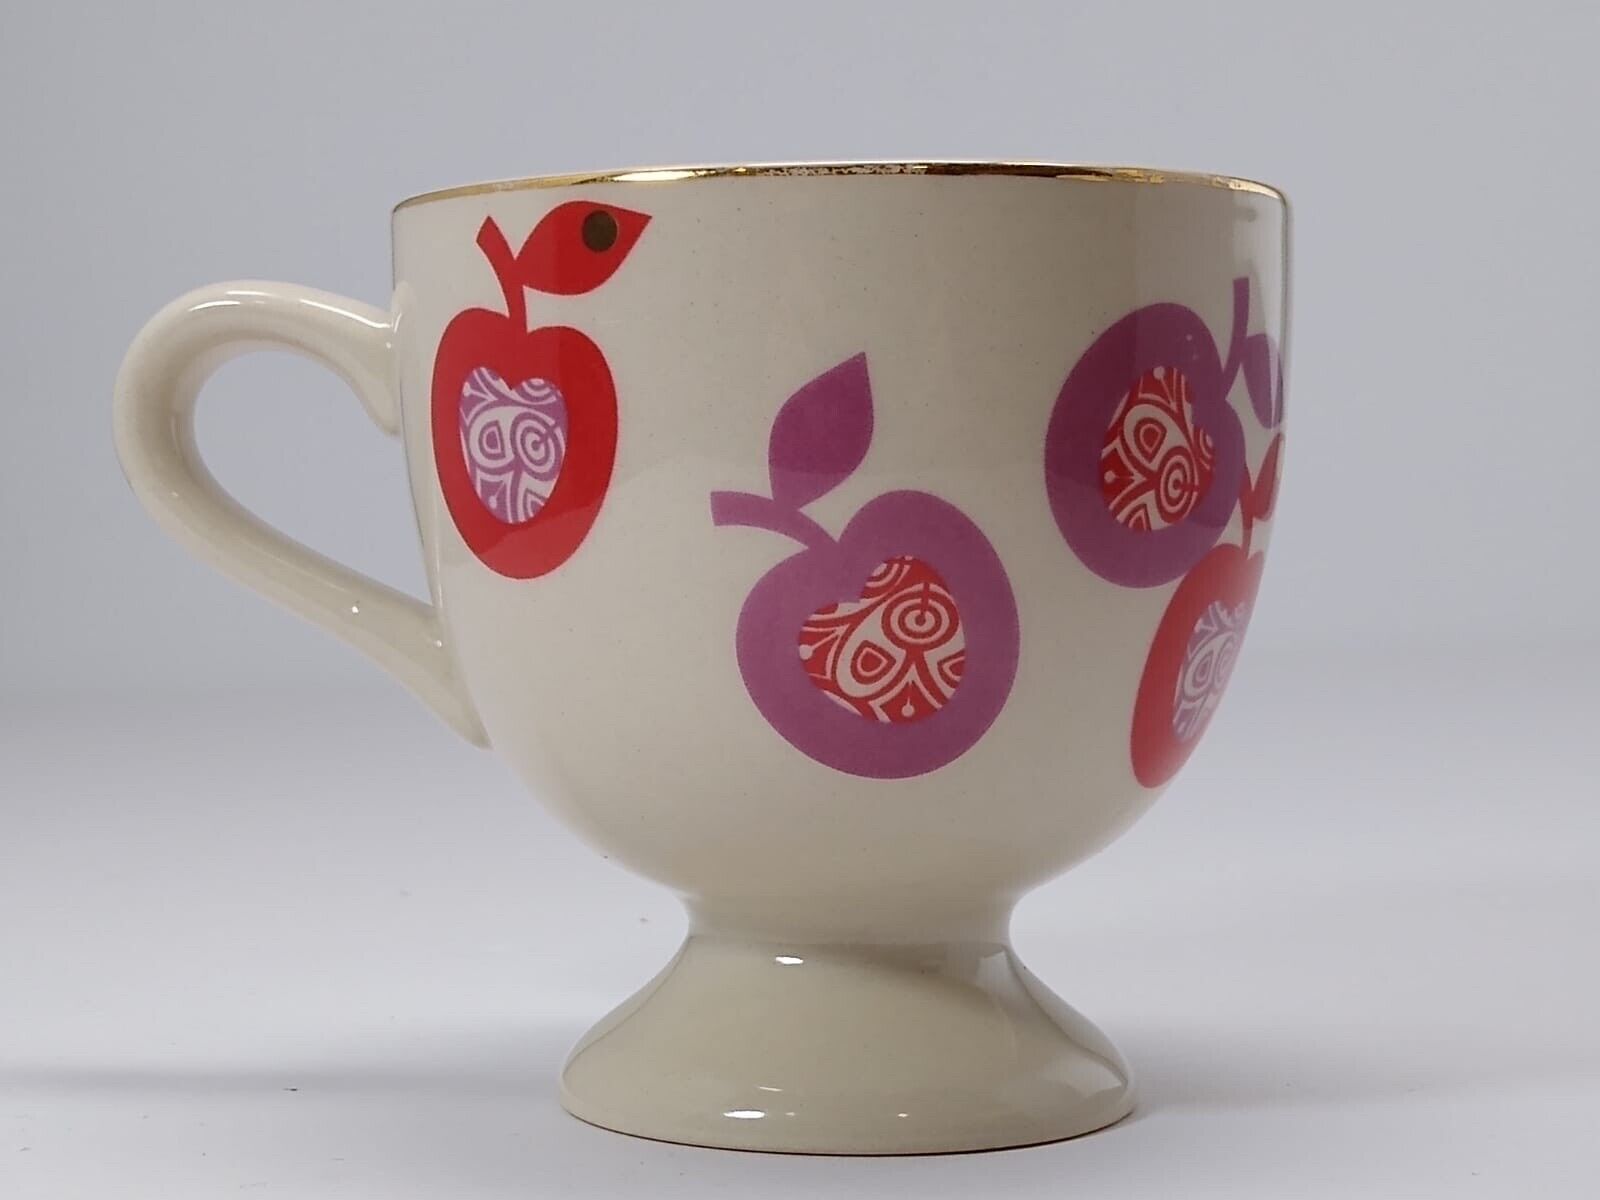 Primary image for Anthropologie Pedestal Mug Apples Ceramic White Coffee Tea Cup Red Interior 8oz.